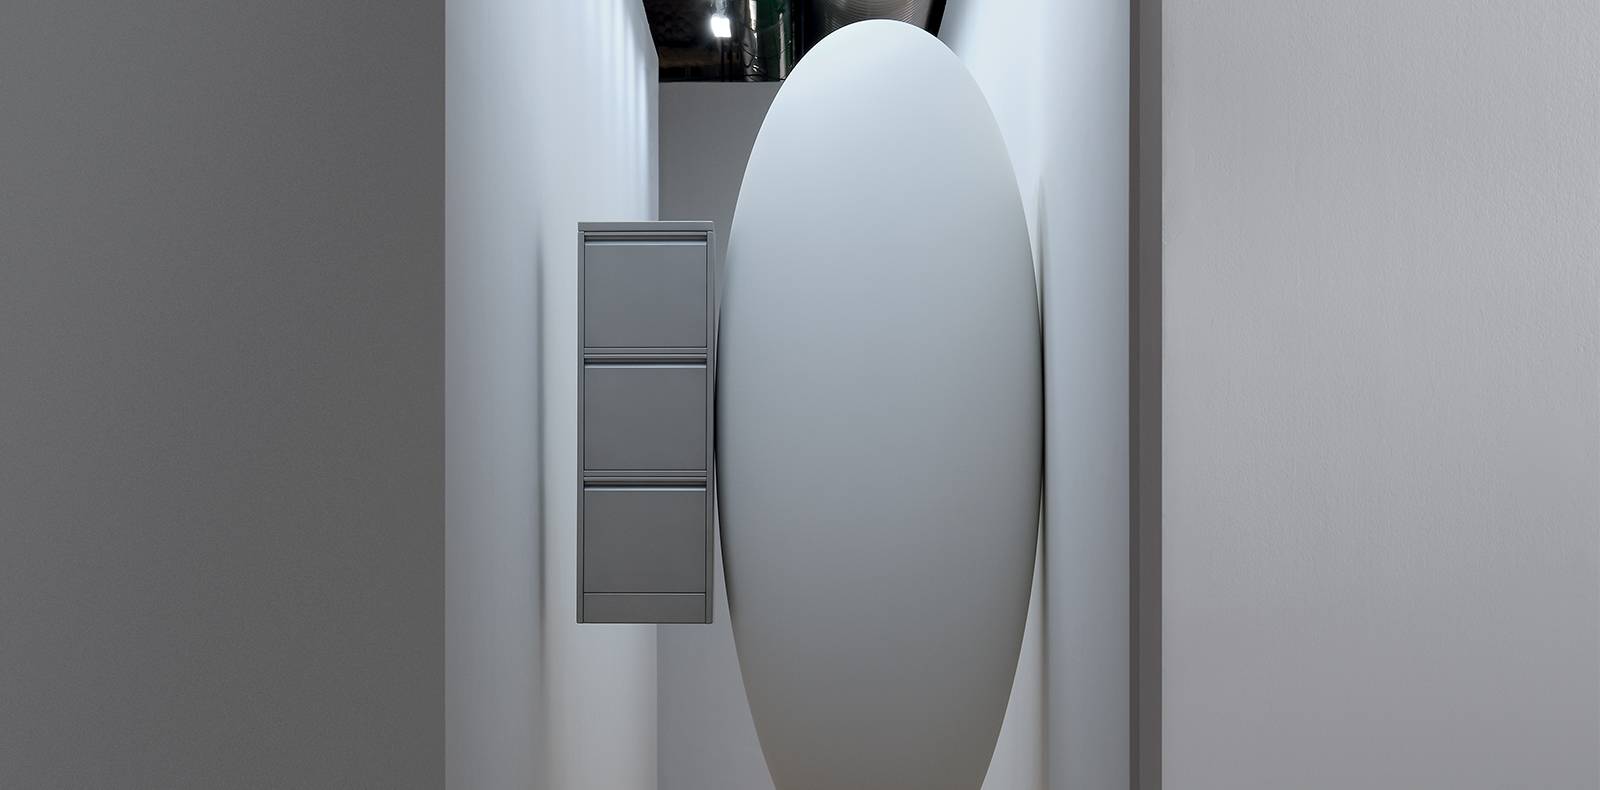 Tarik Kiswanson, Prix Marcel Duchamp, Exposition Centre Pompidou